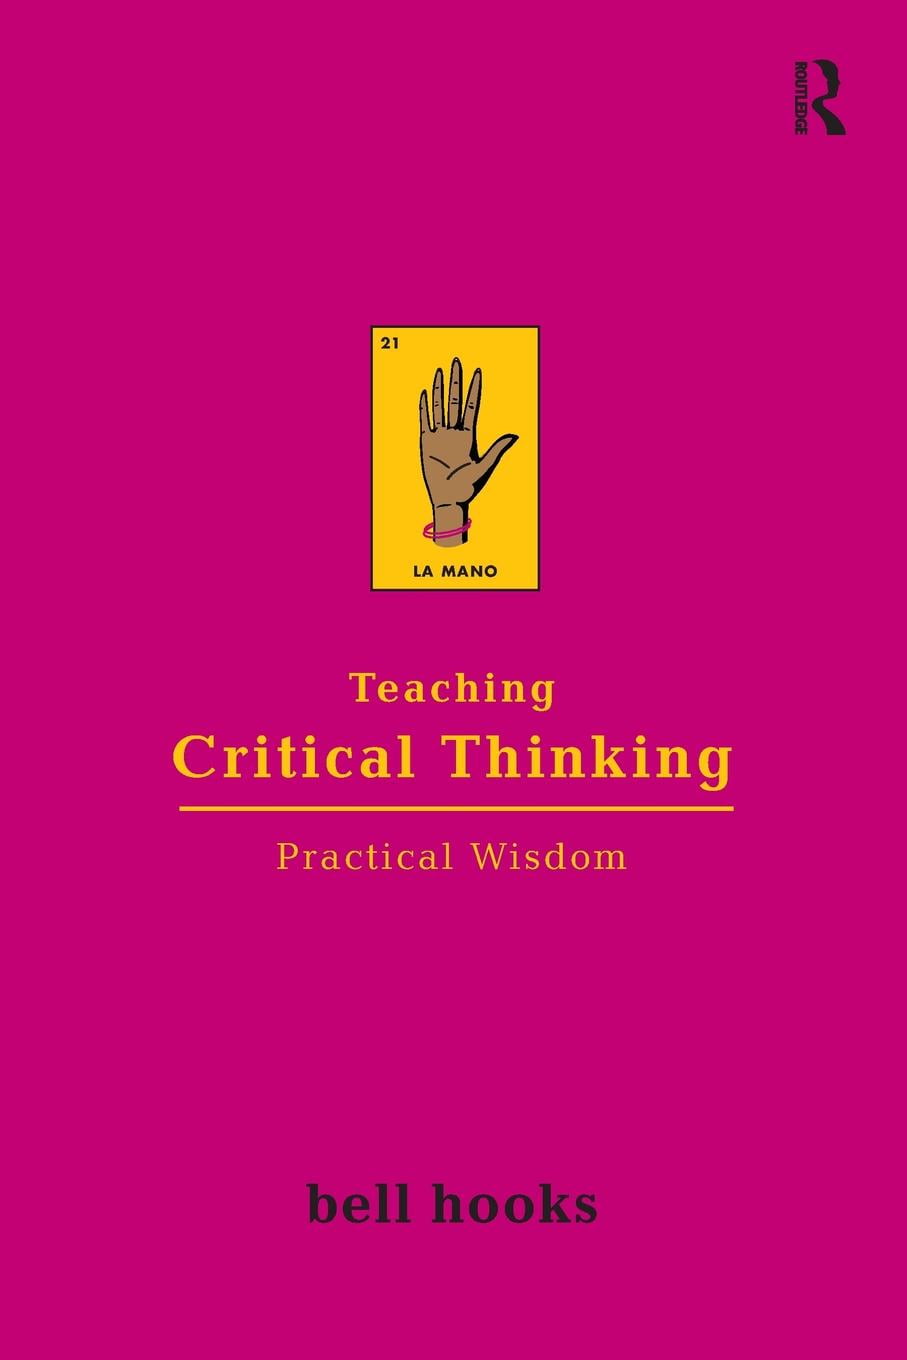 teaching critical thinking bell hooks